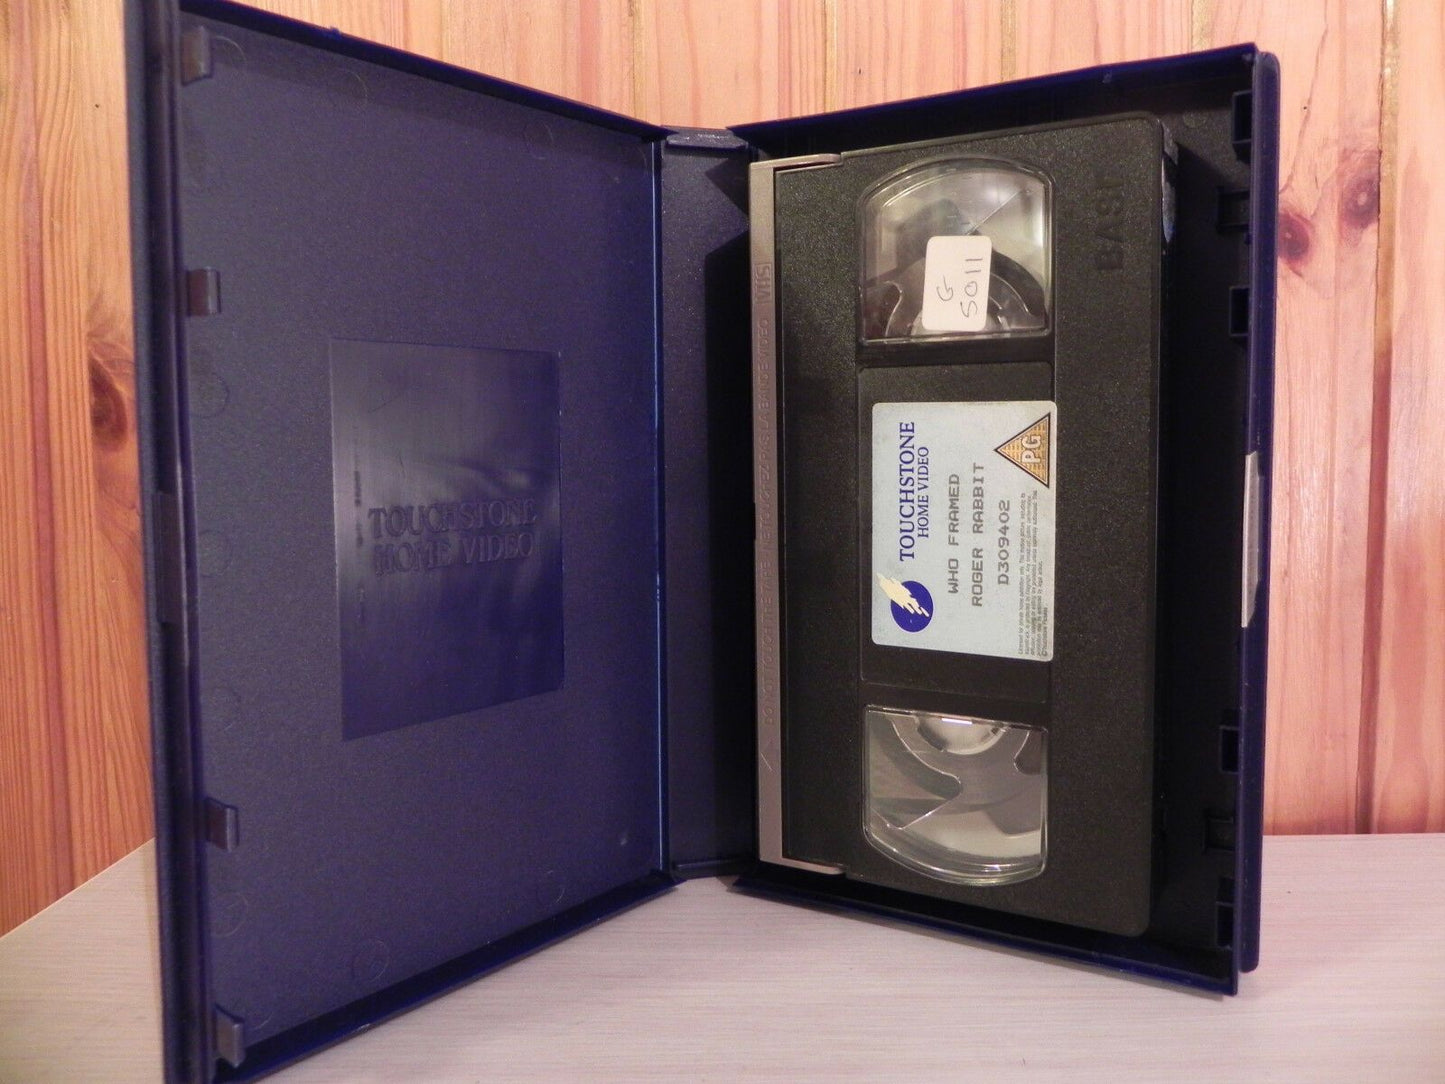 Who Framed Roger Rabbit - Large Box - Touchstone Home - Hoskins - Comedy - VHS-